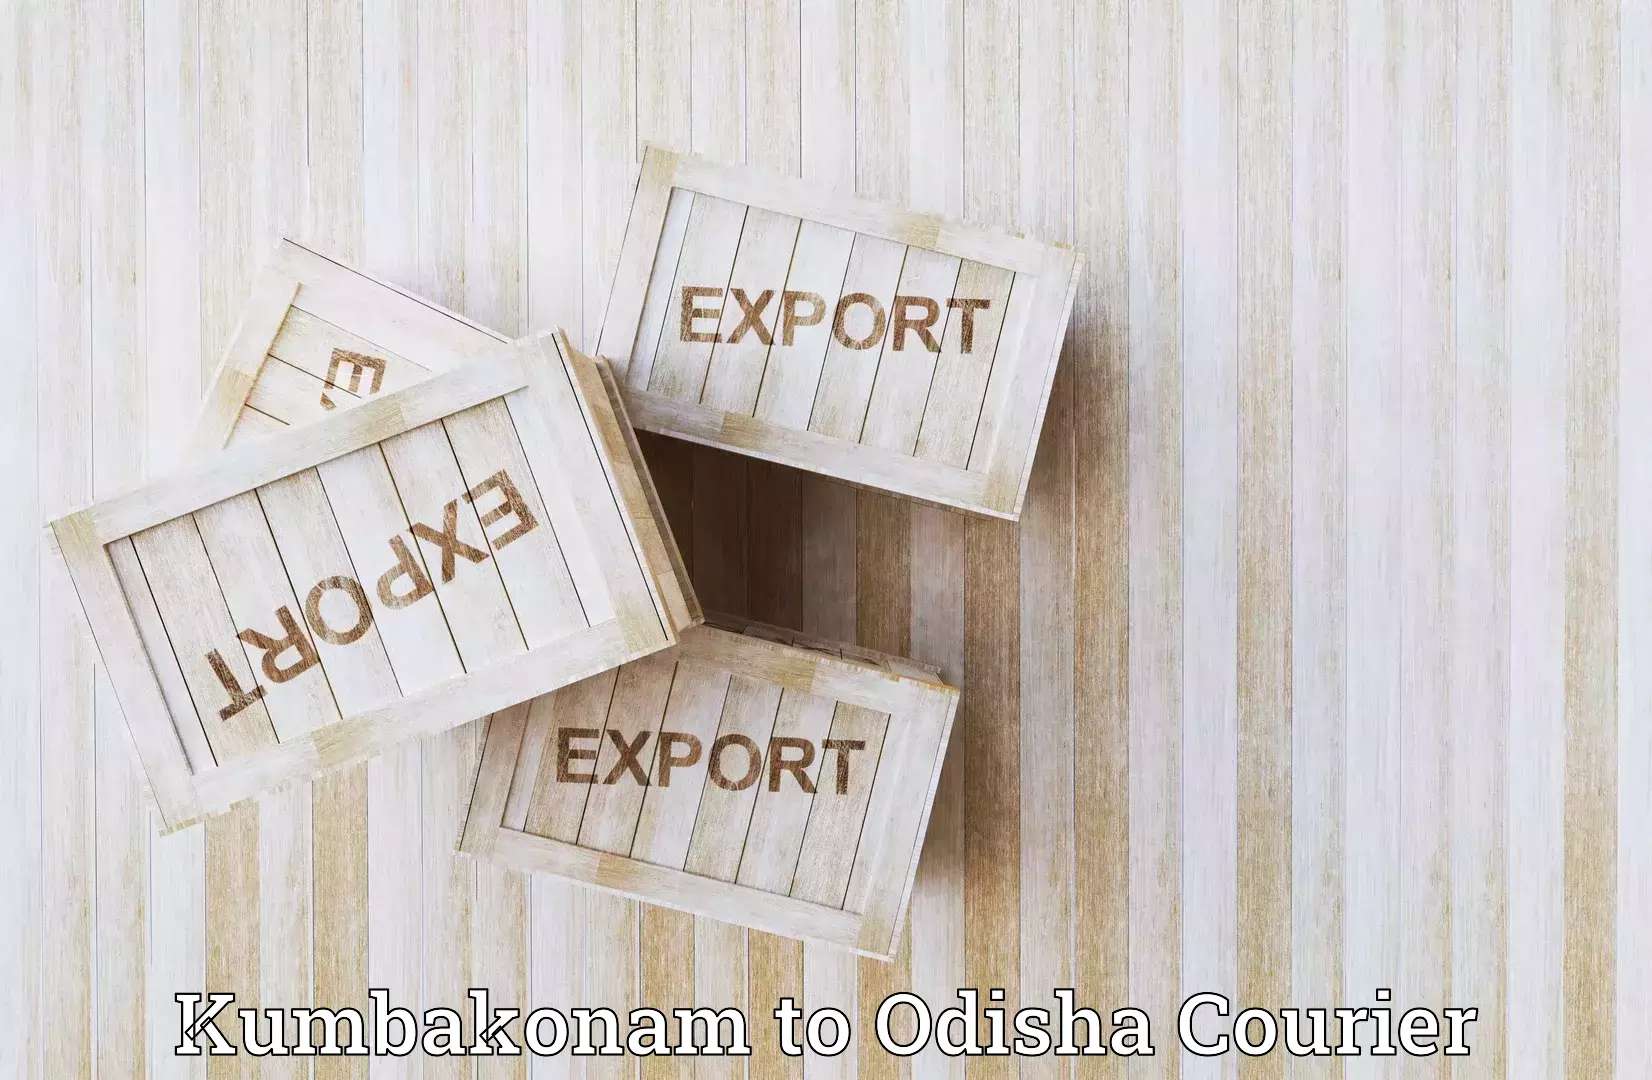 Global logistics network Kumbakonam to Odisha